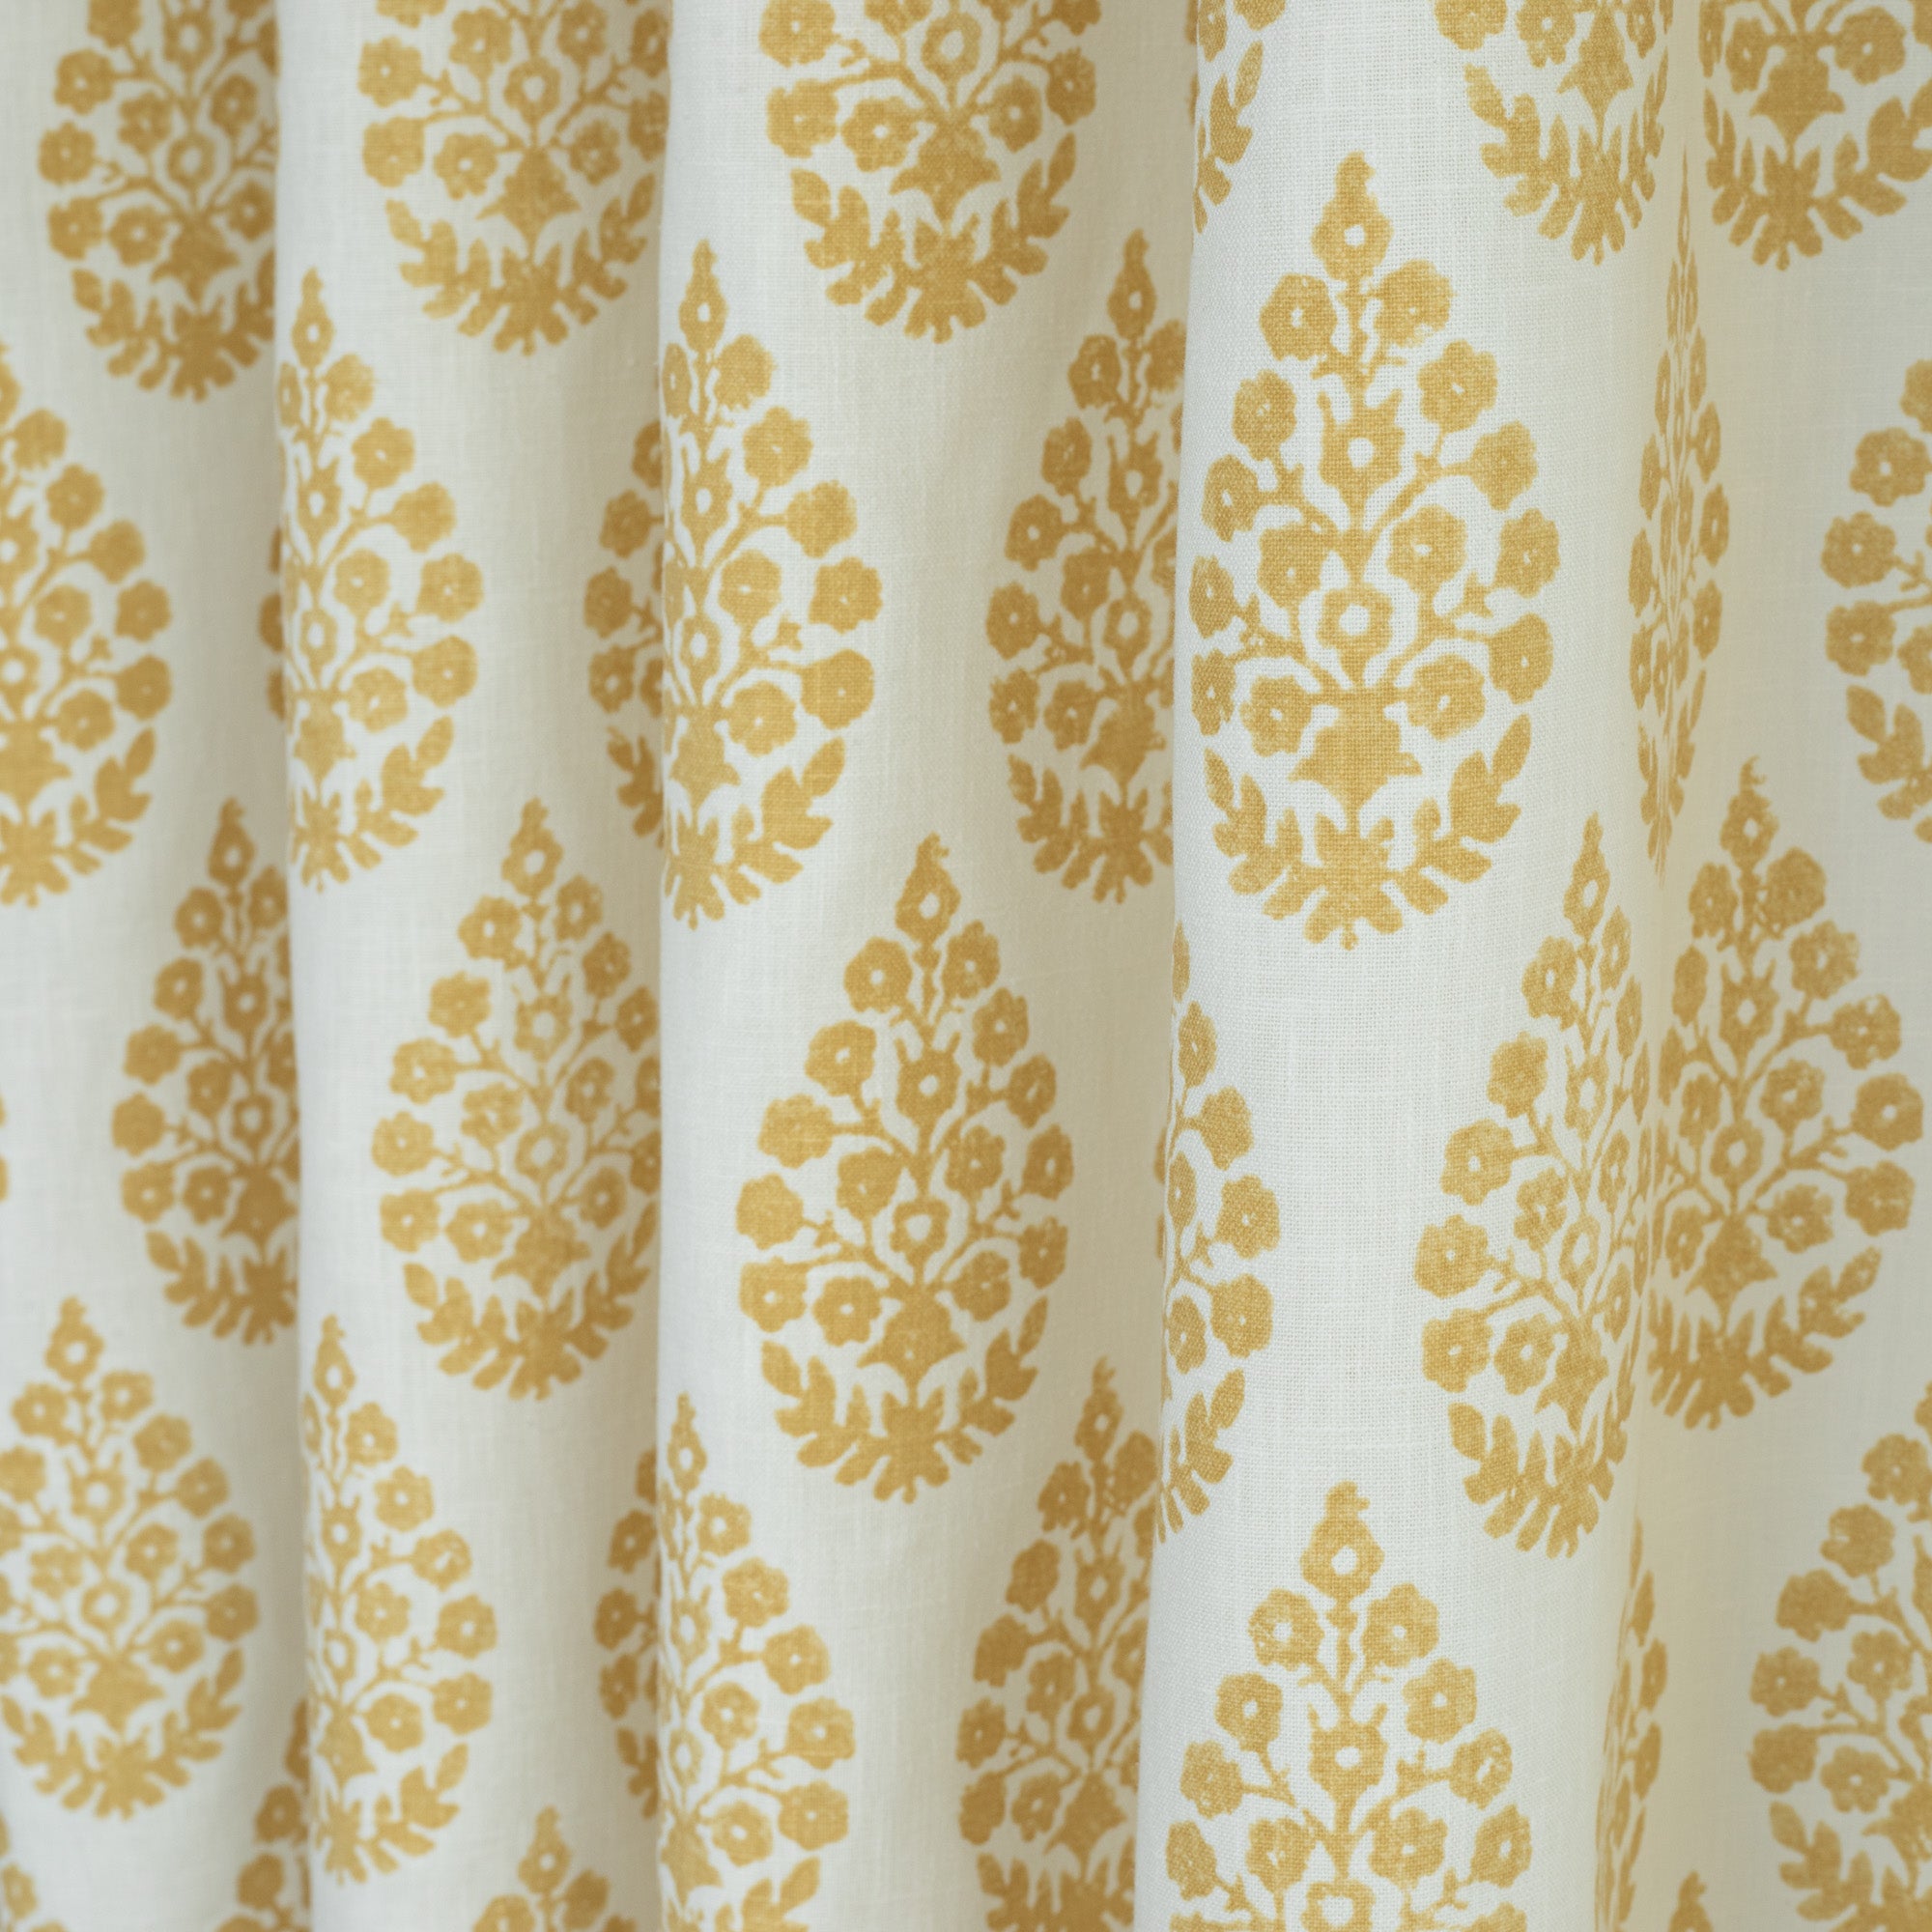 Chandra gold ochre yellow and cream  floral block print drapery fabric : view 2